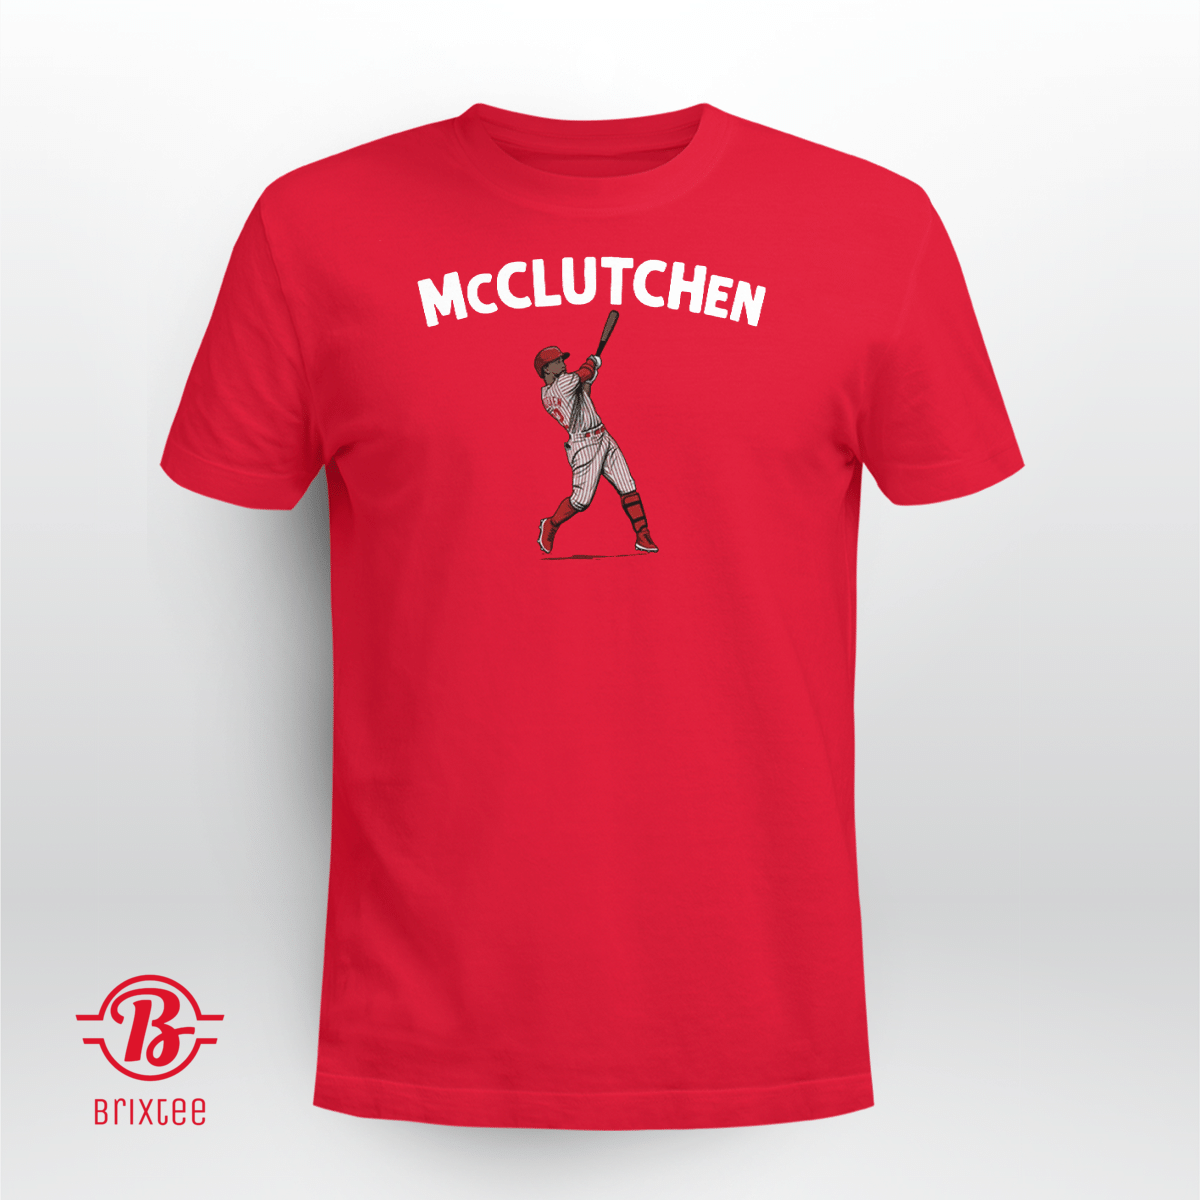 Andrew McCutchen - Philadelphia Phillies - MLBPA Licensed